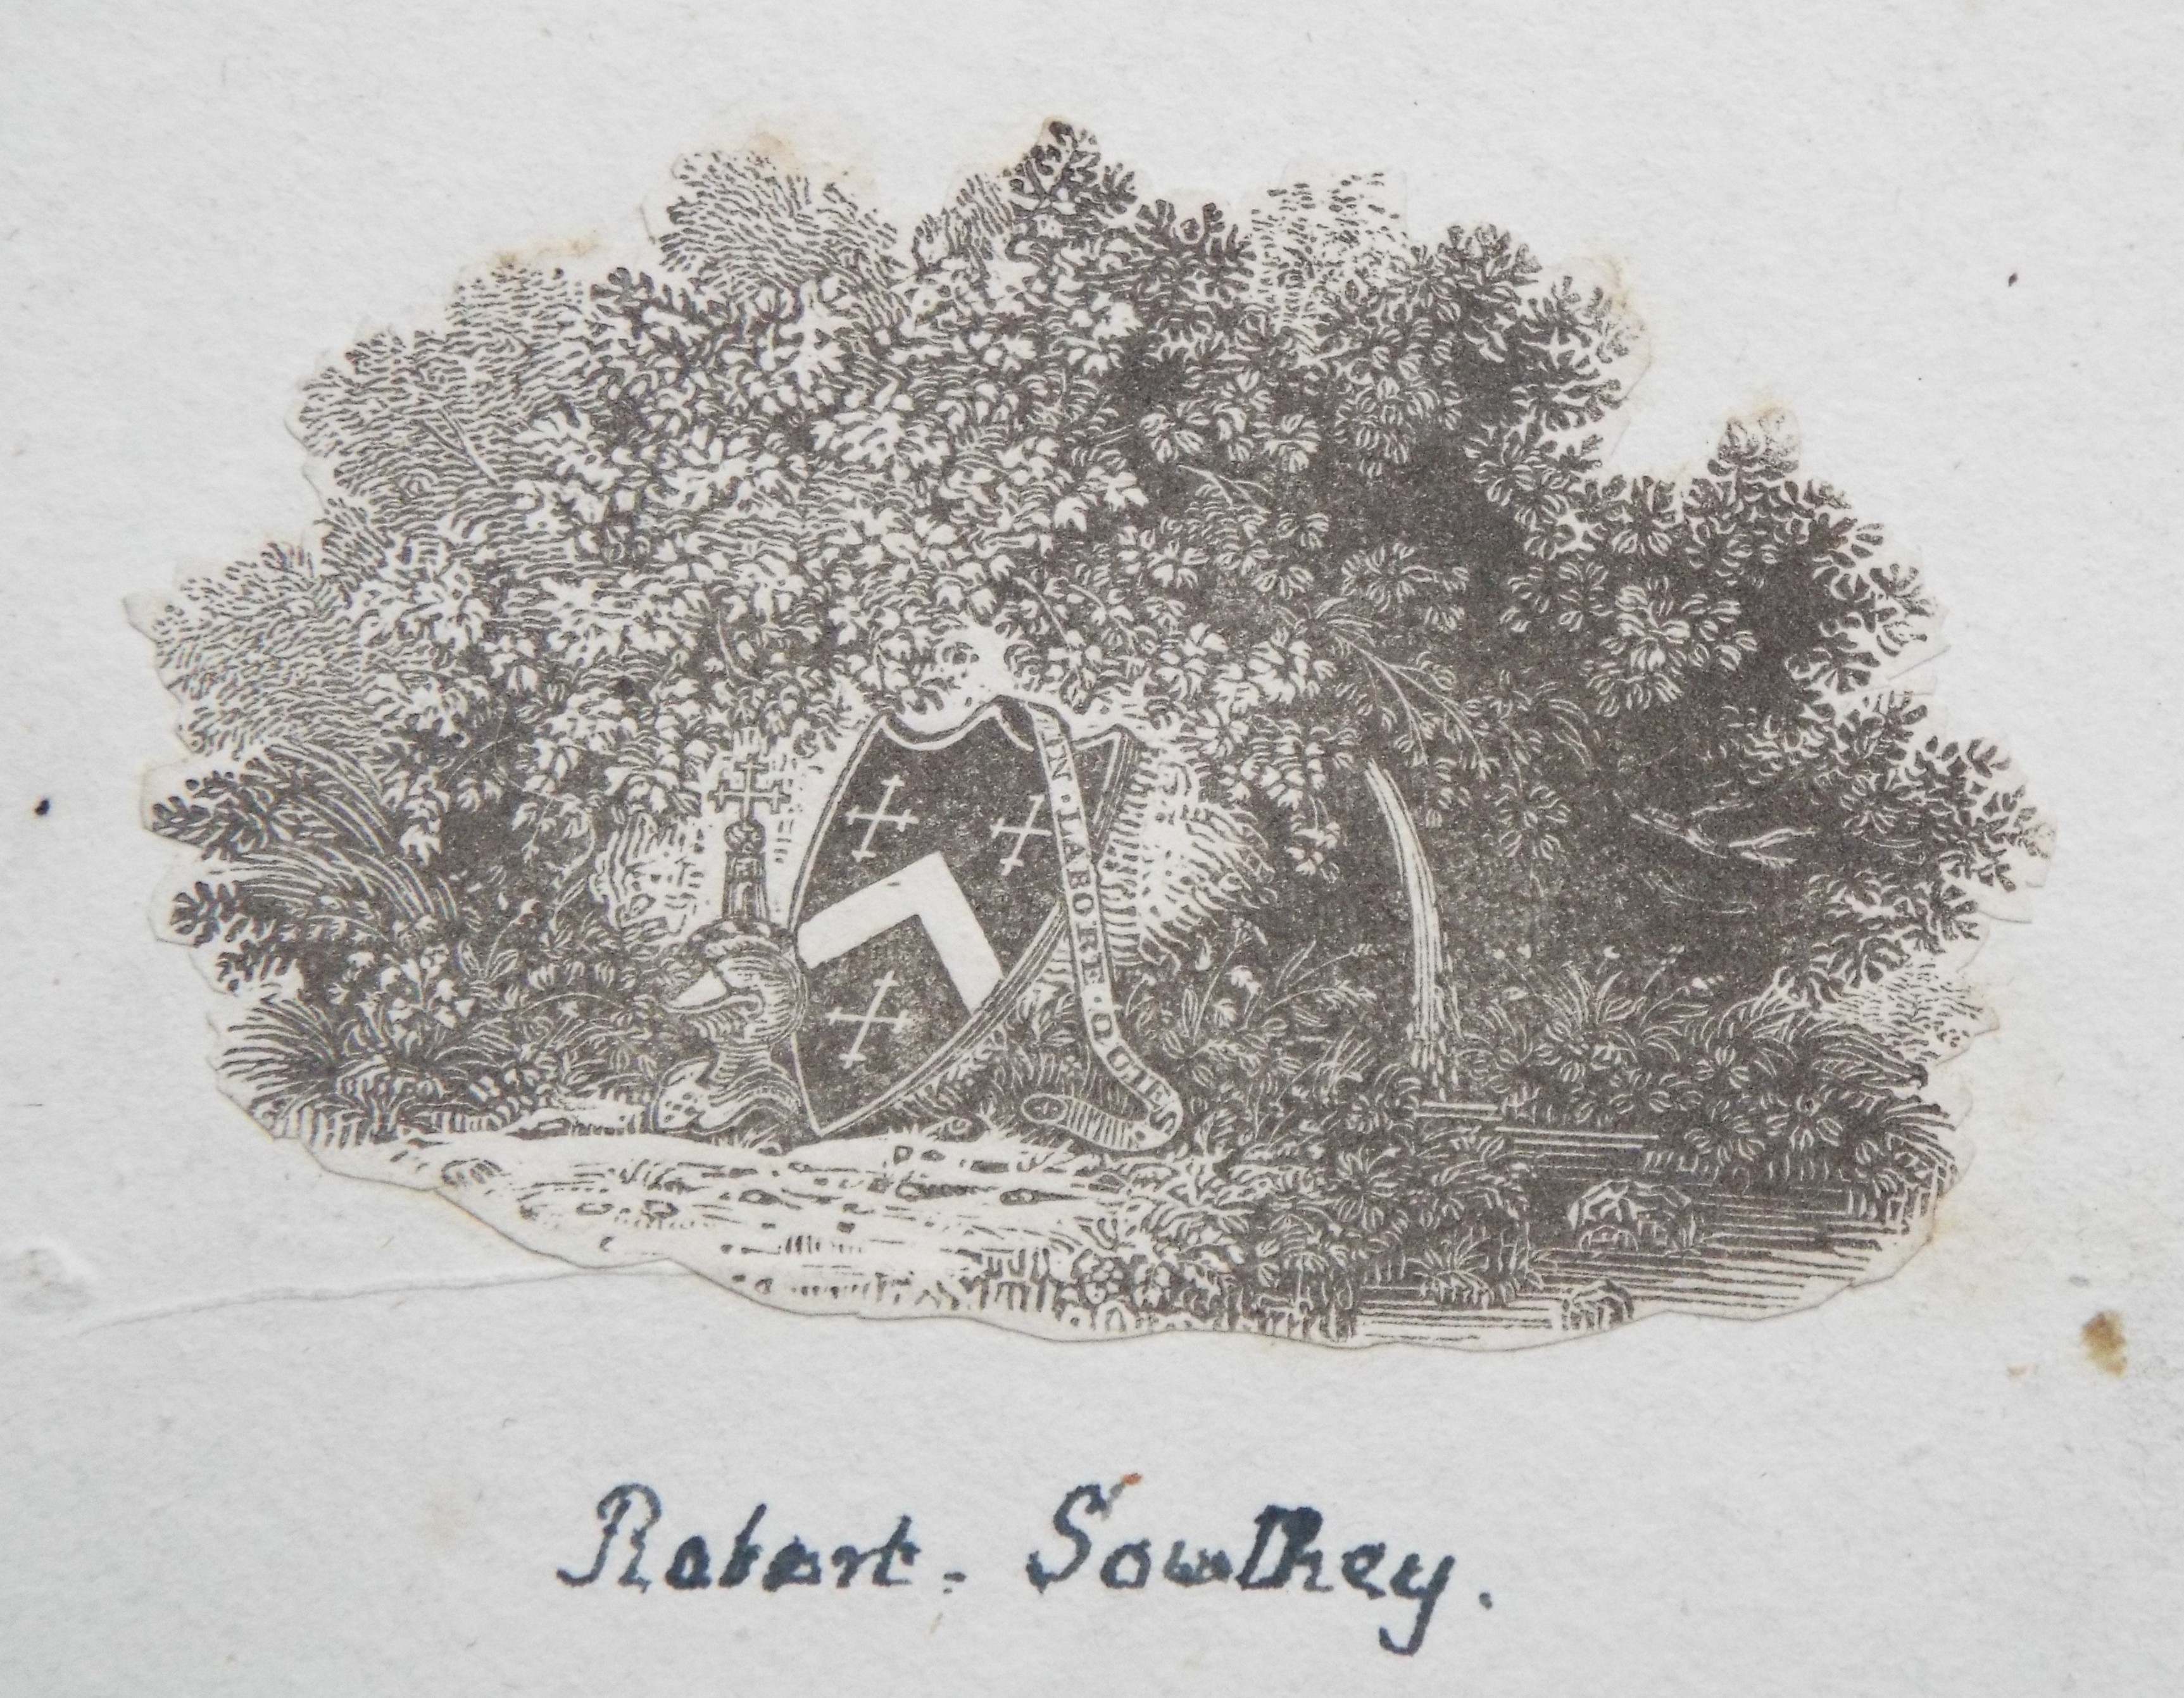 Wood - Bookplate of Robert Southey by Thomas Bewick - Bewick